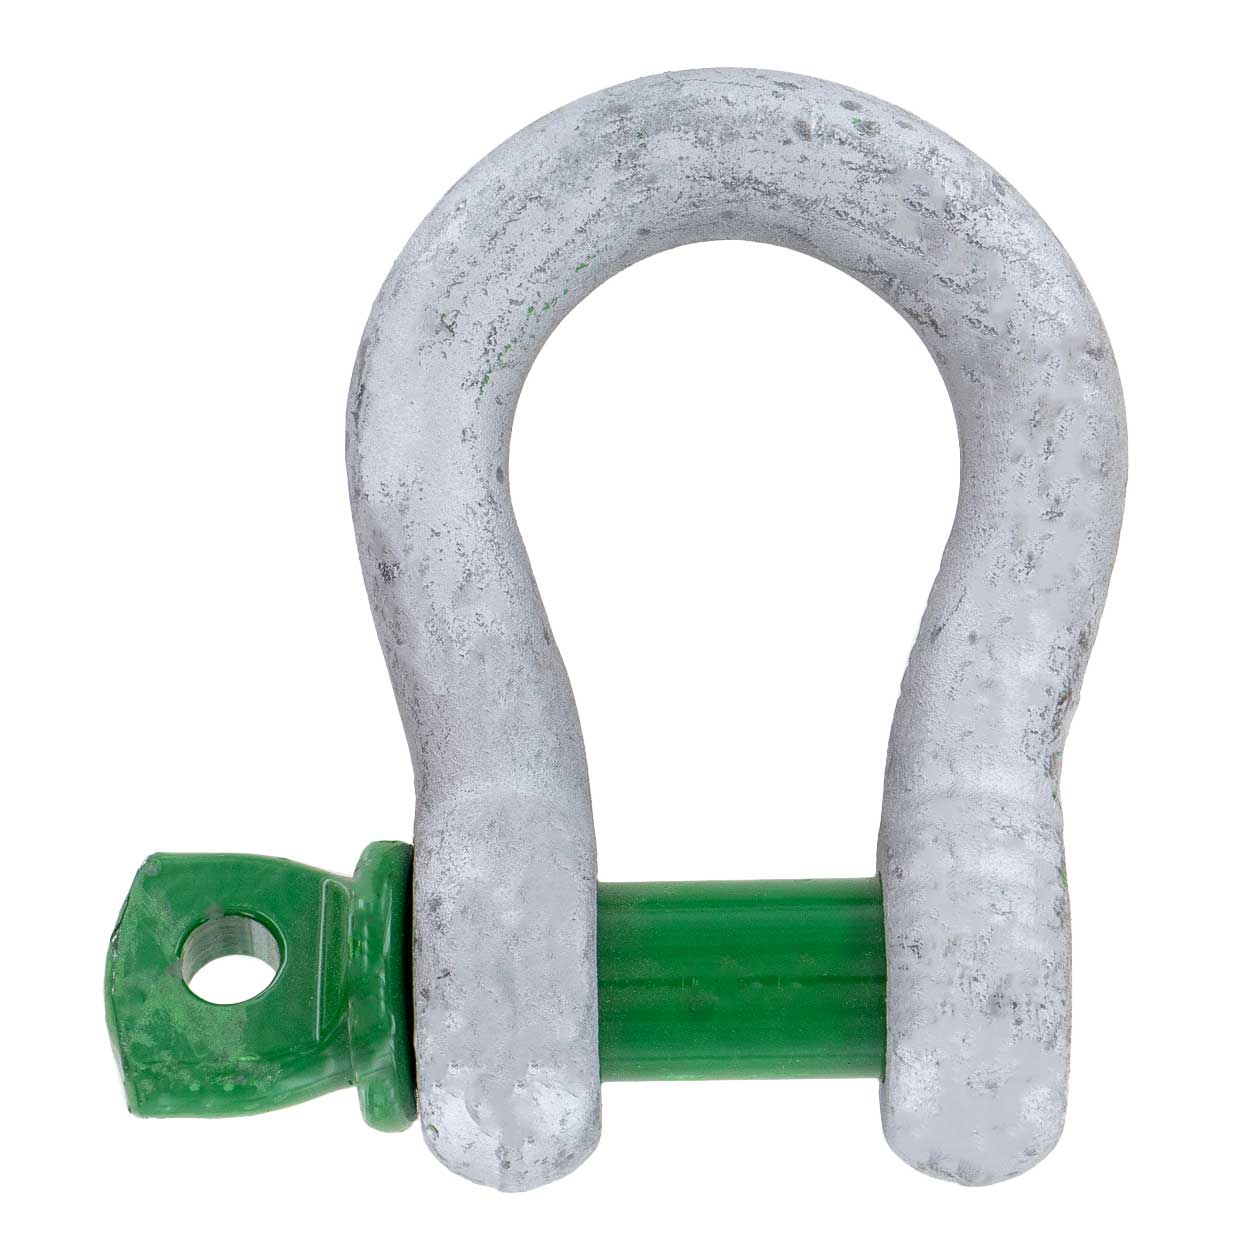 1/2" Van Beest Green Pin® Screw Pin Anchor Shackle | G-4161 - 2 Ton rear view